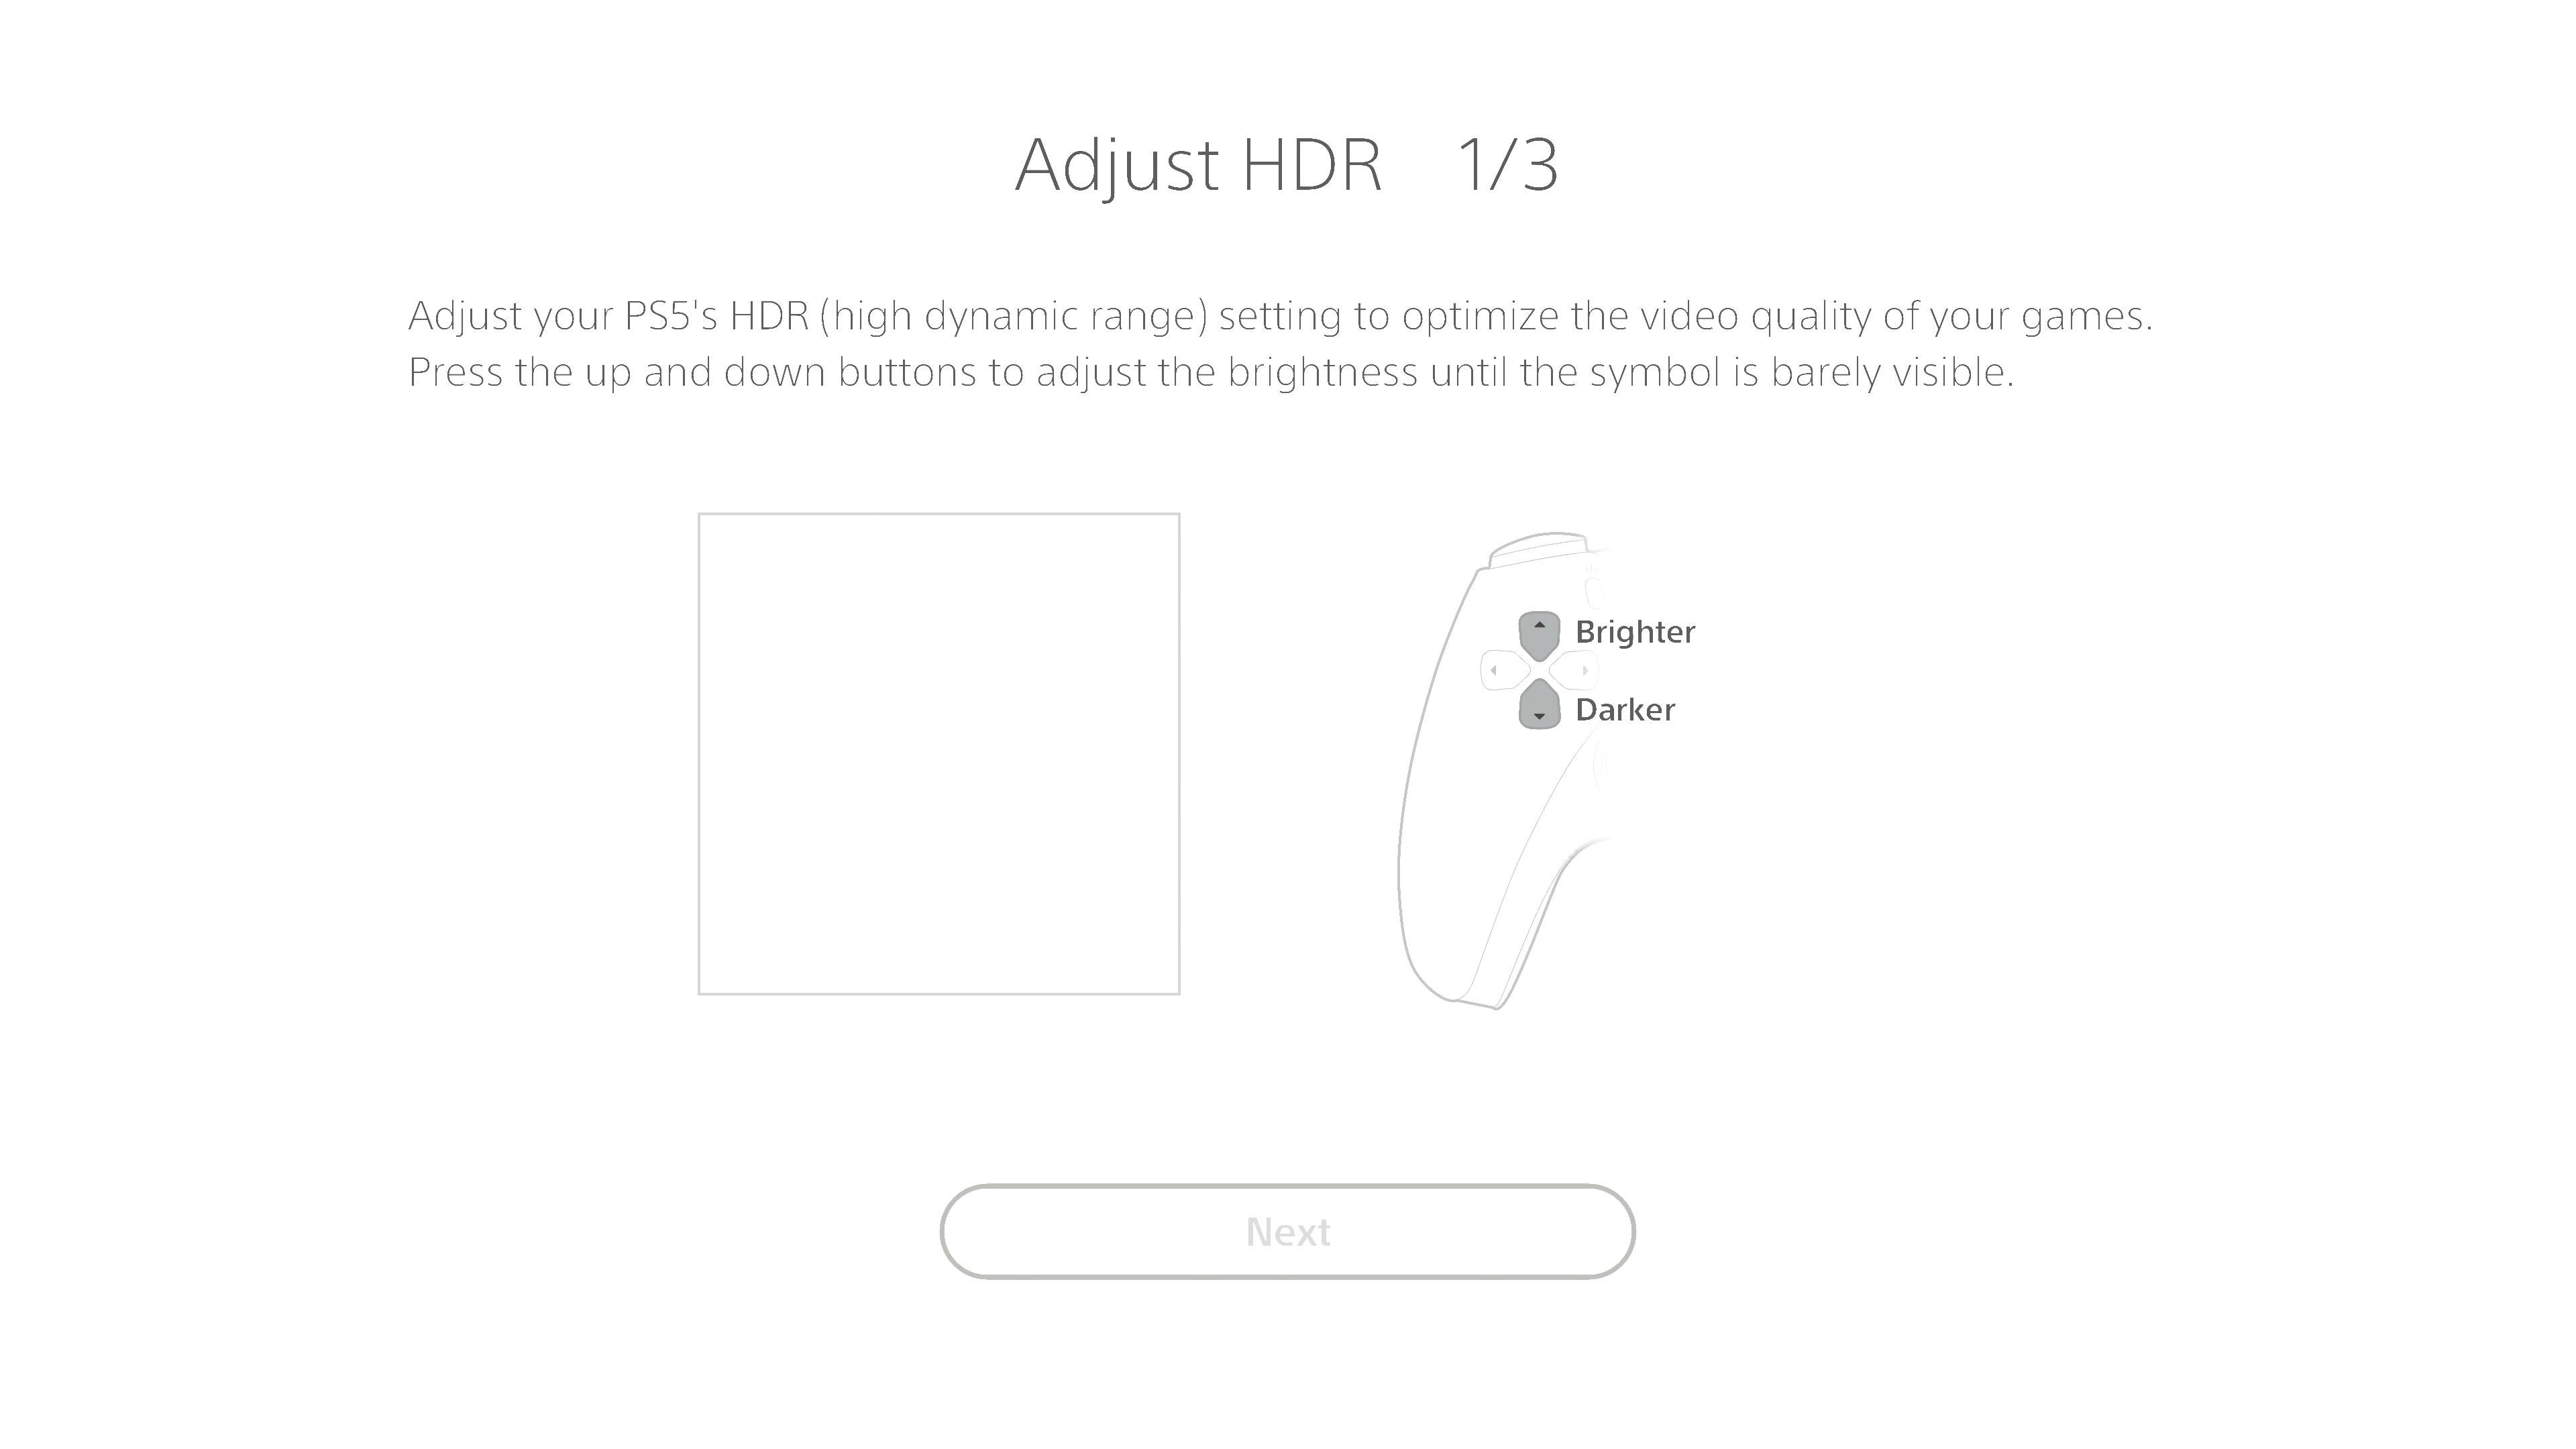 PS5 HDR adjustment